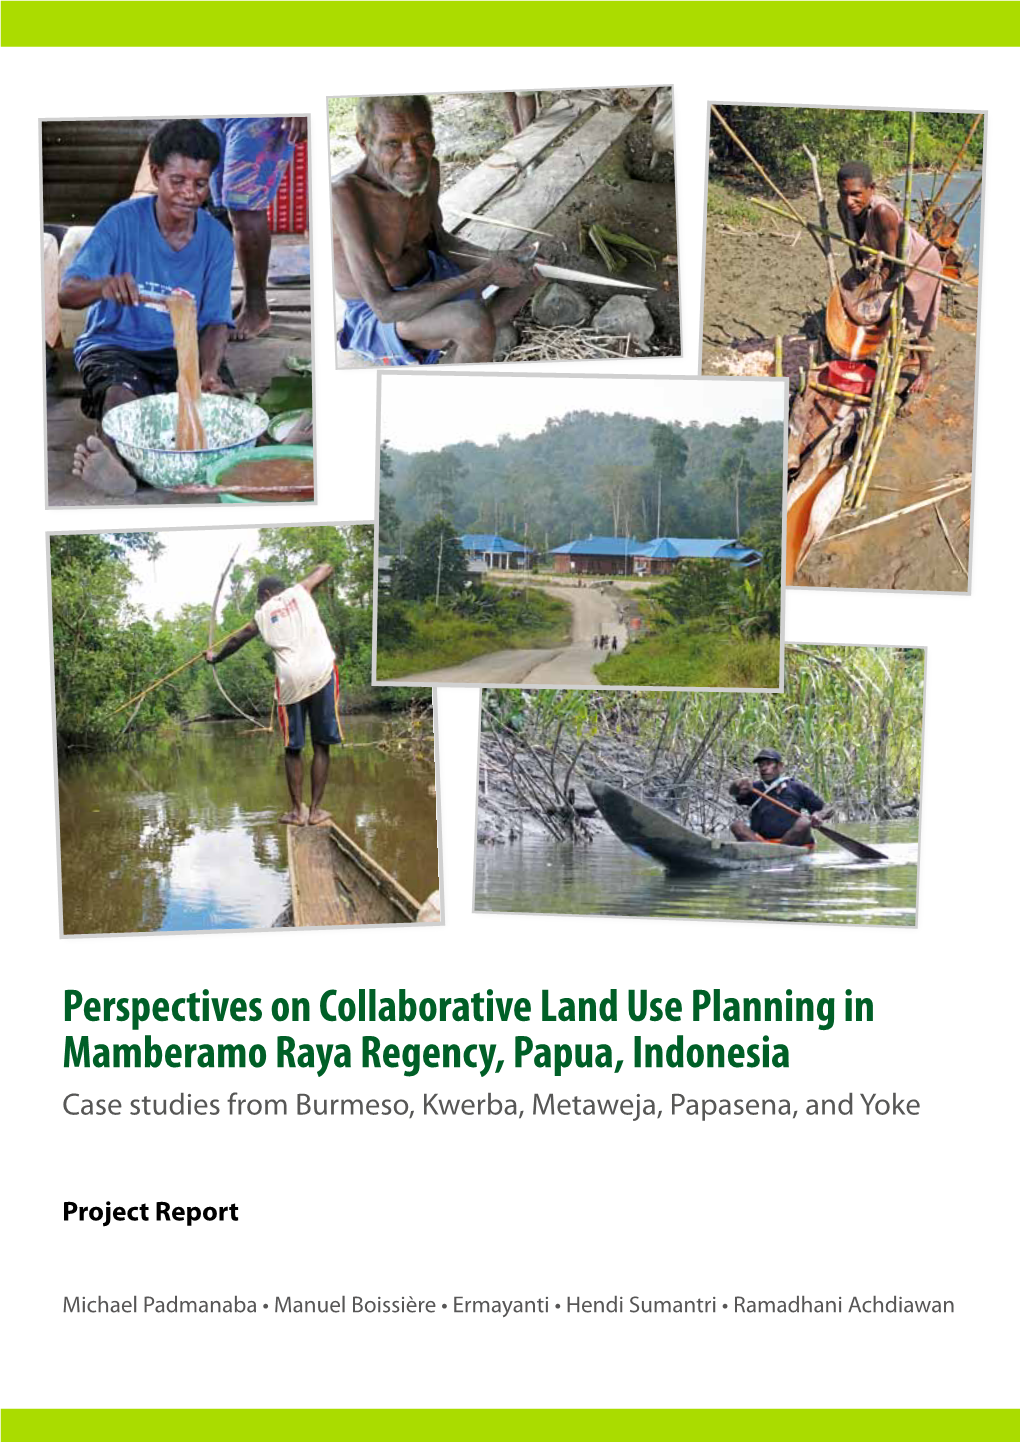 Perspectives on Collaborative Land Use Planning in Mamberamo Raya Regency, Papua, Indonesia Case Studies from Burmeso, Kwerba, Metaweja, Papasena, and Yoke